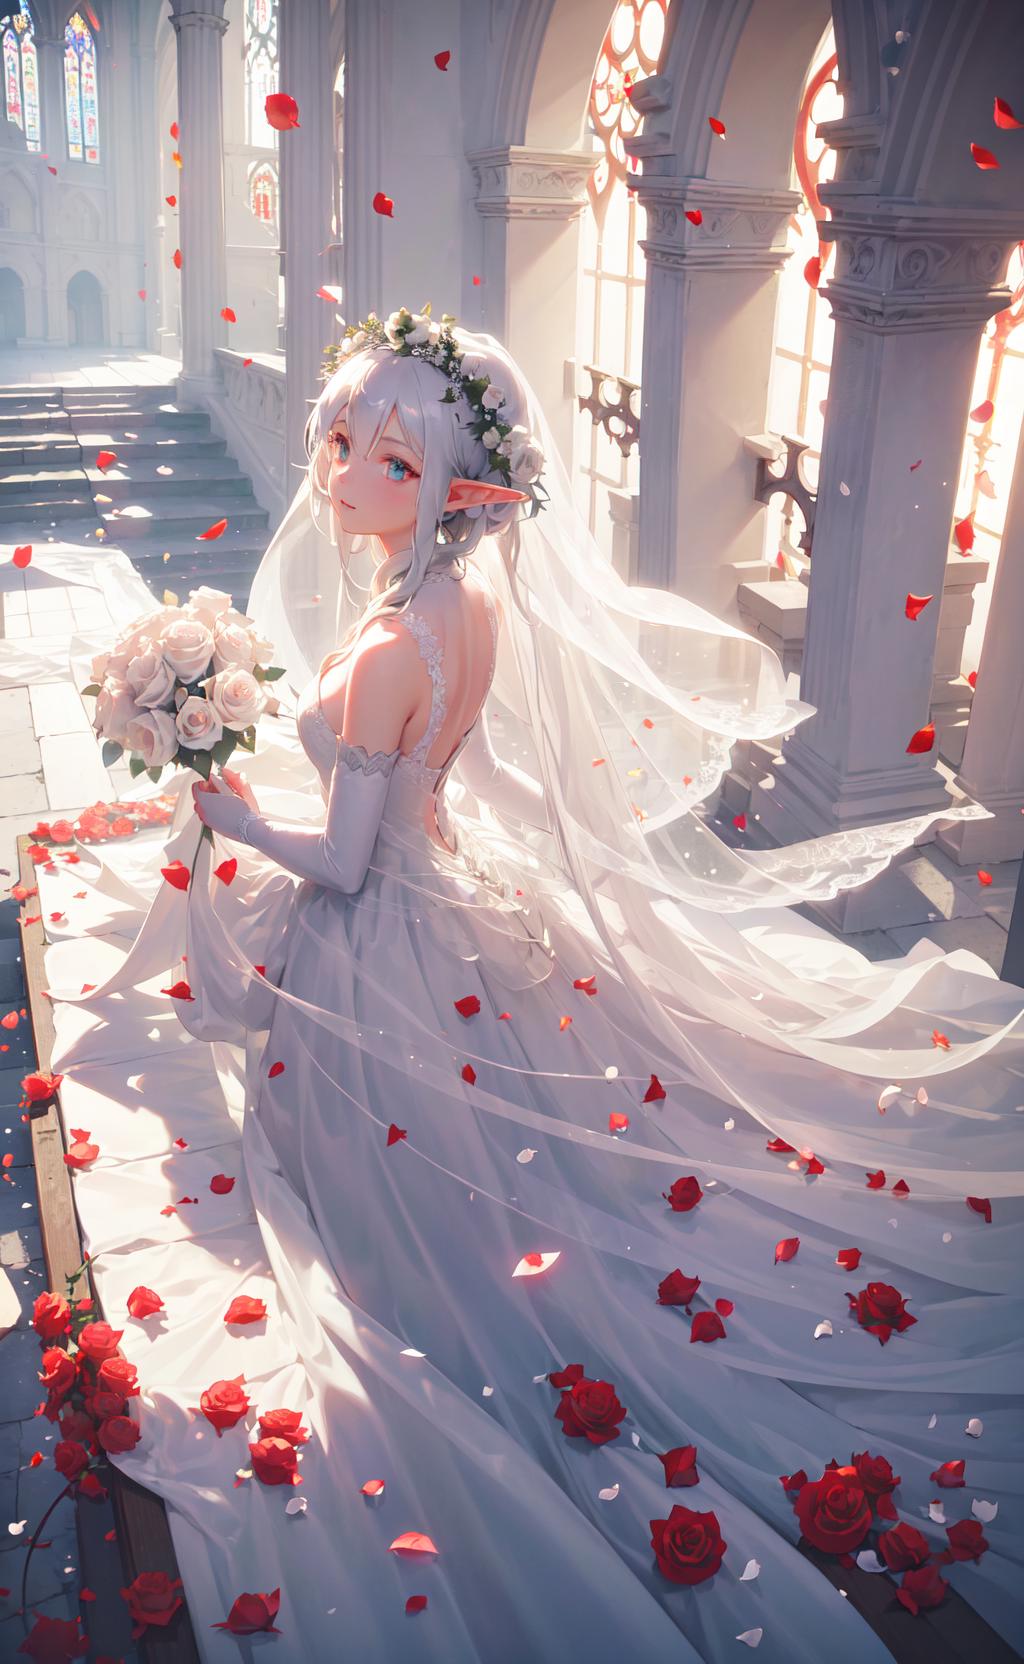 Premium AI Image | An anime girl with white dears wearing wedding dress  cartoon